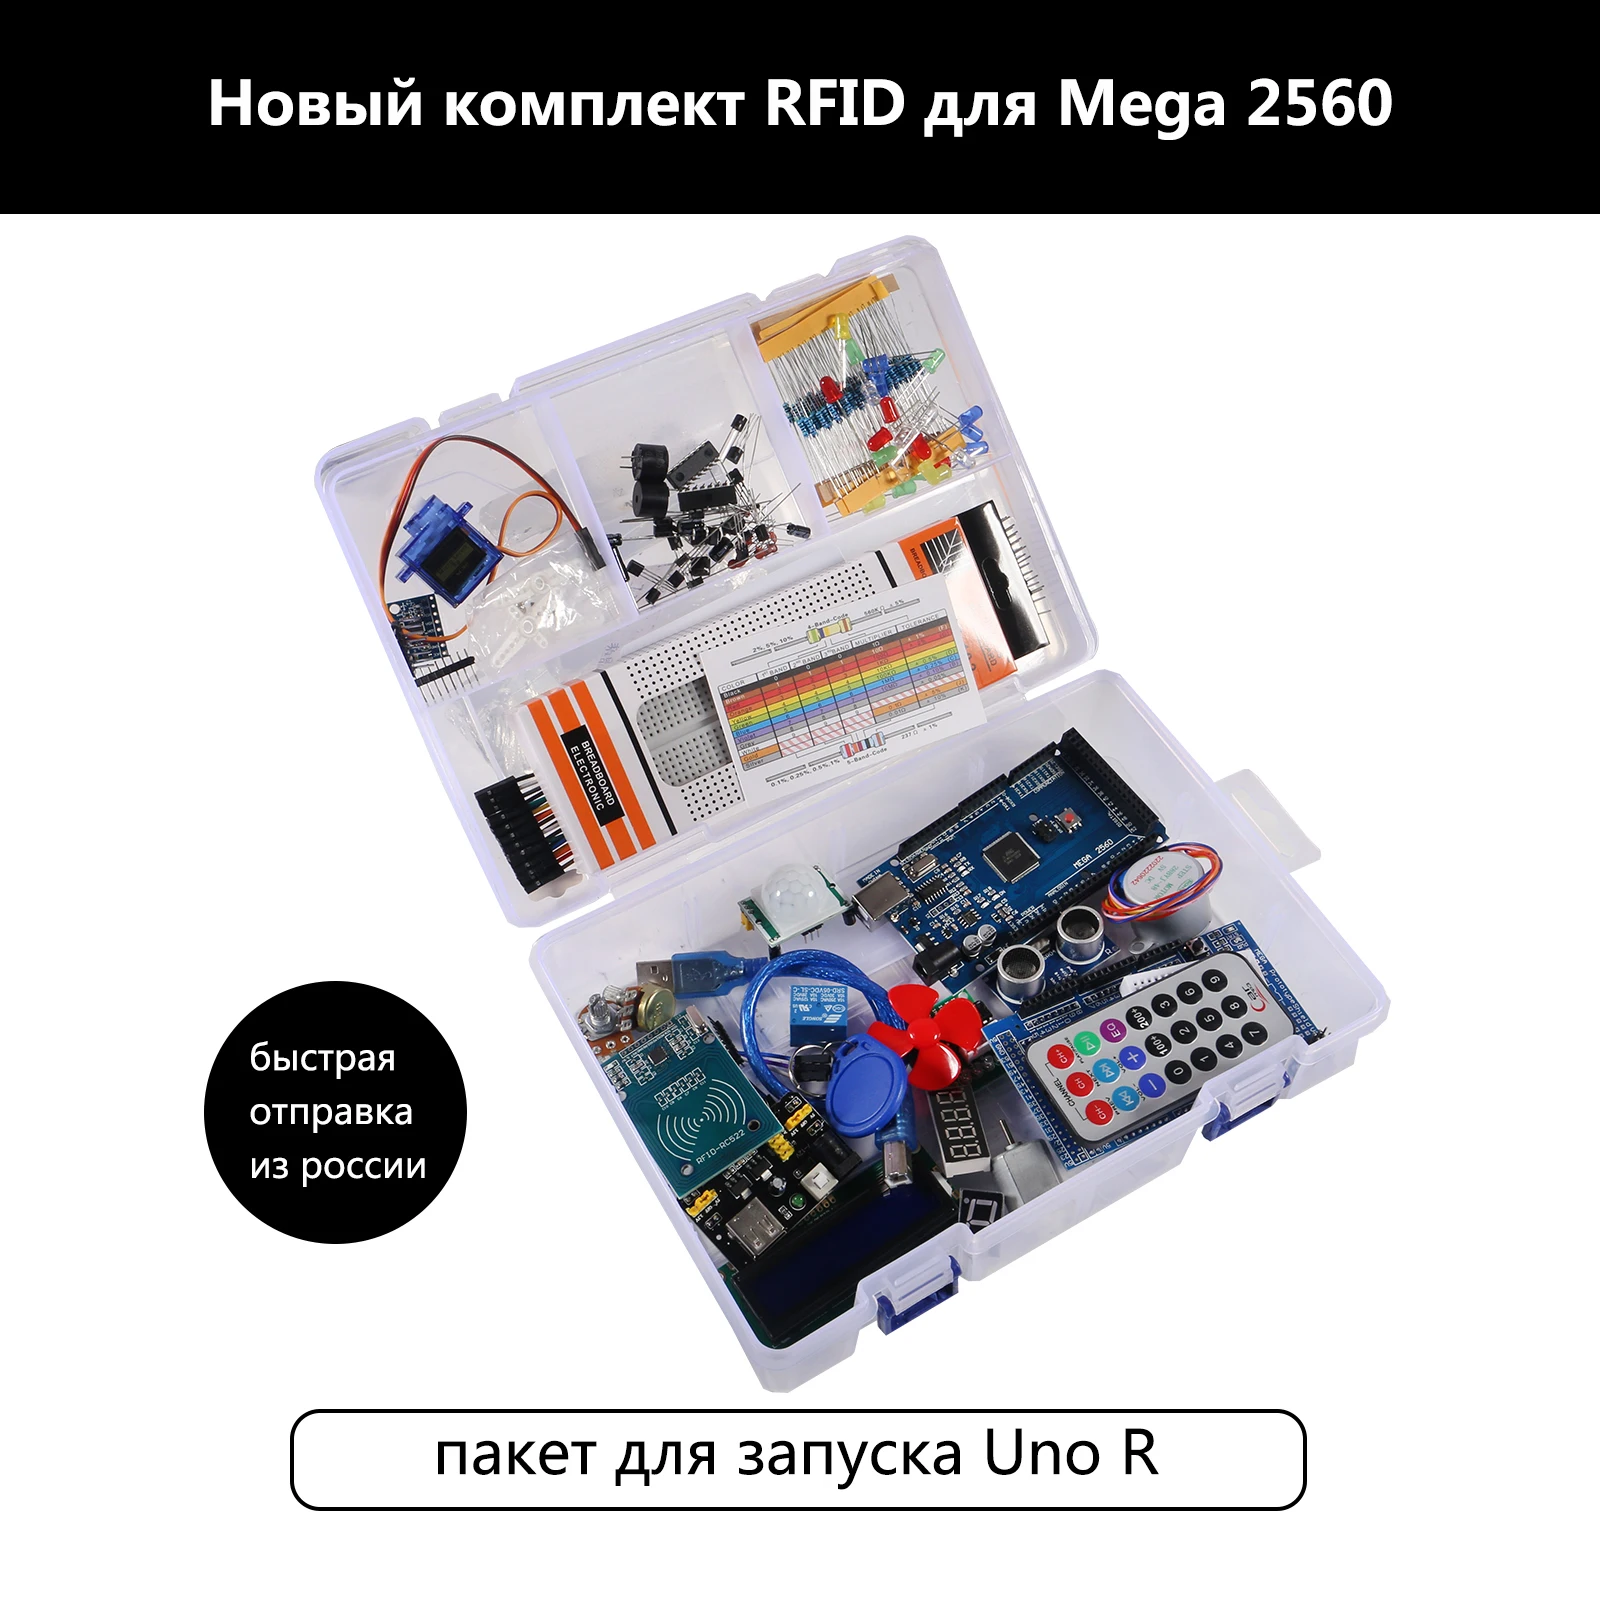 DIY Kit MEGA 2560 pour Raspberry Pi Model B , pour Arduino. DIY